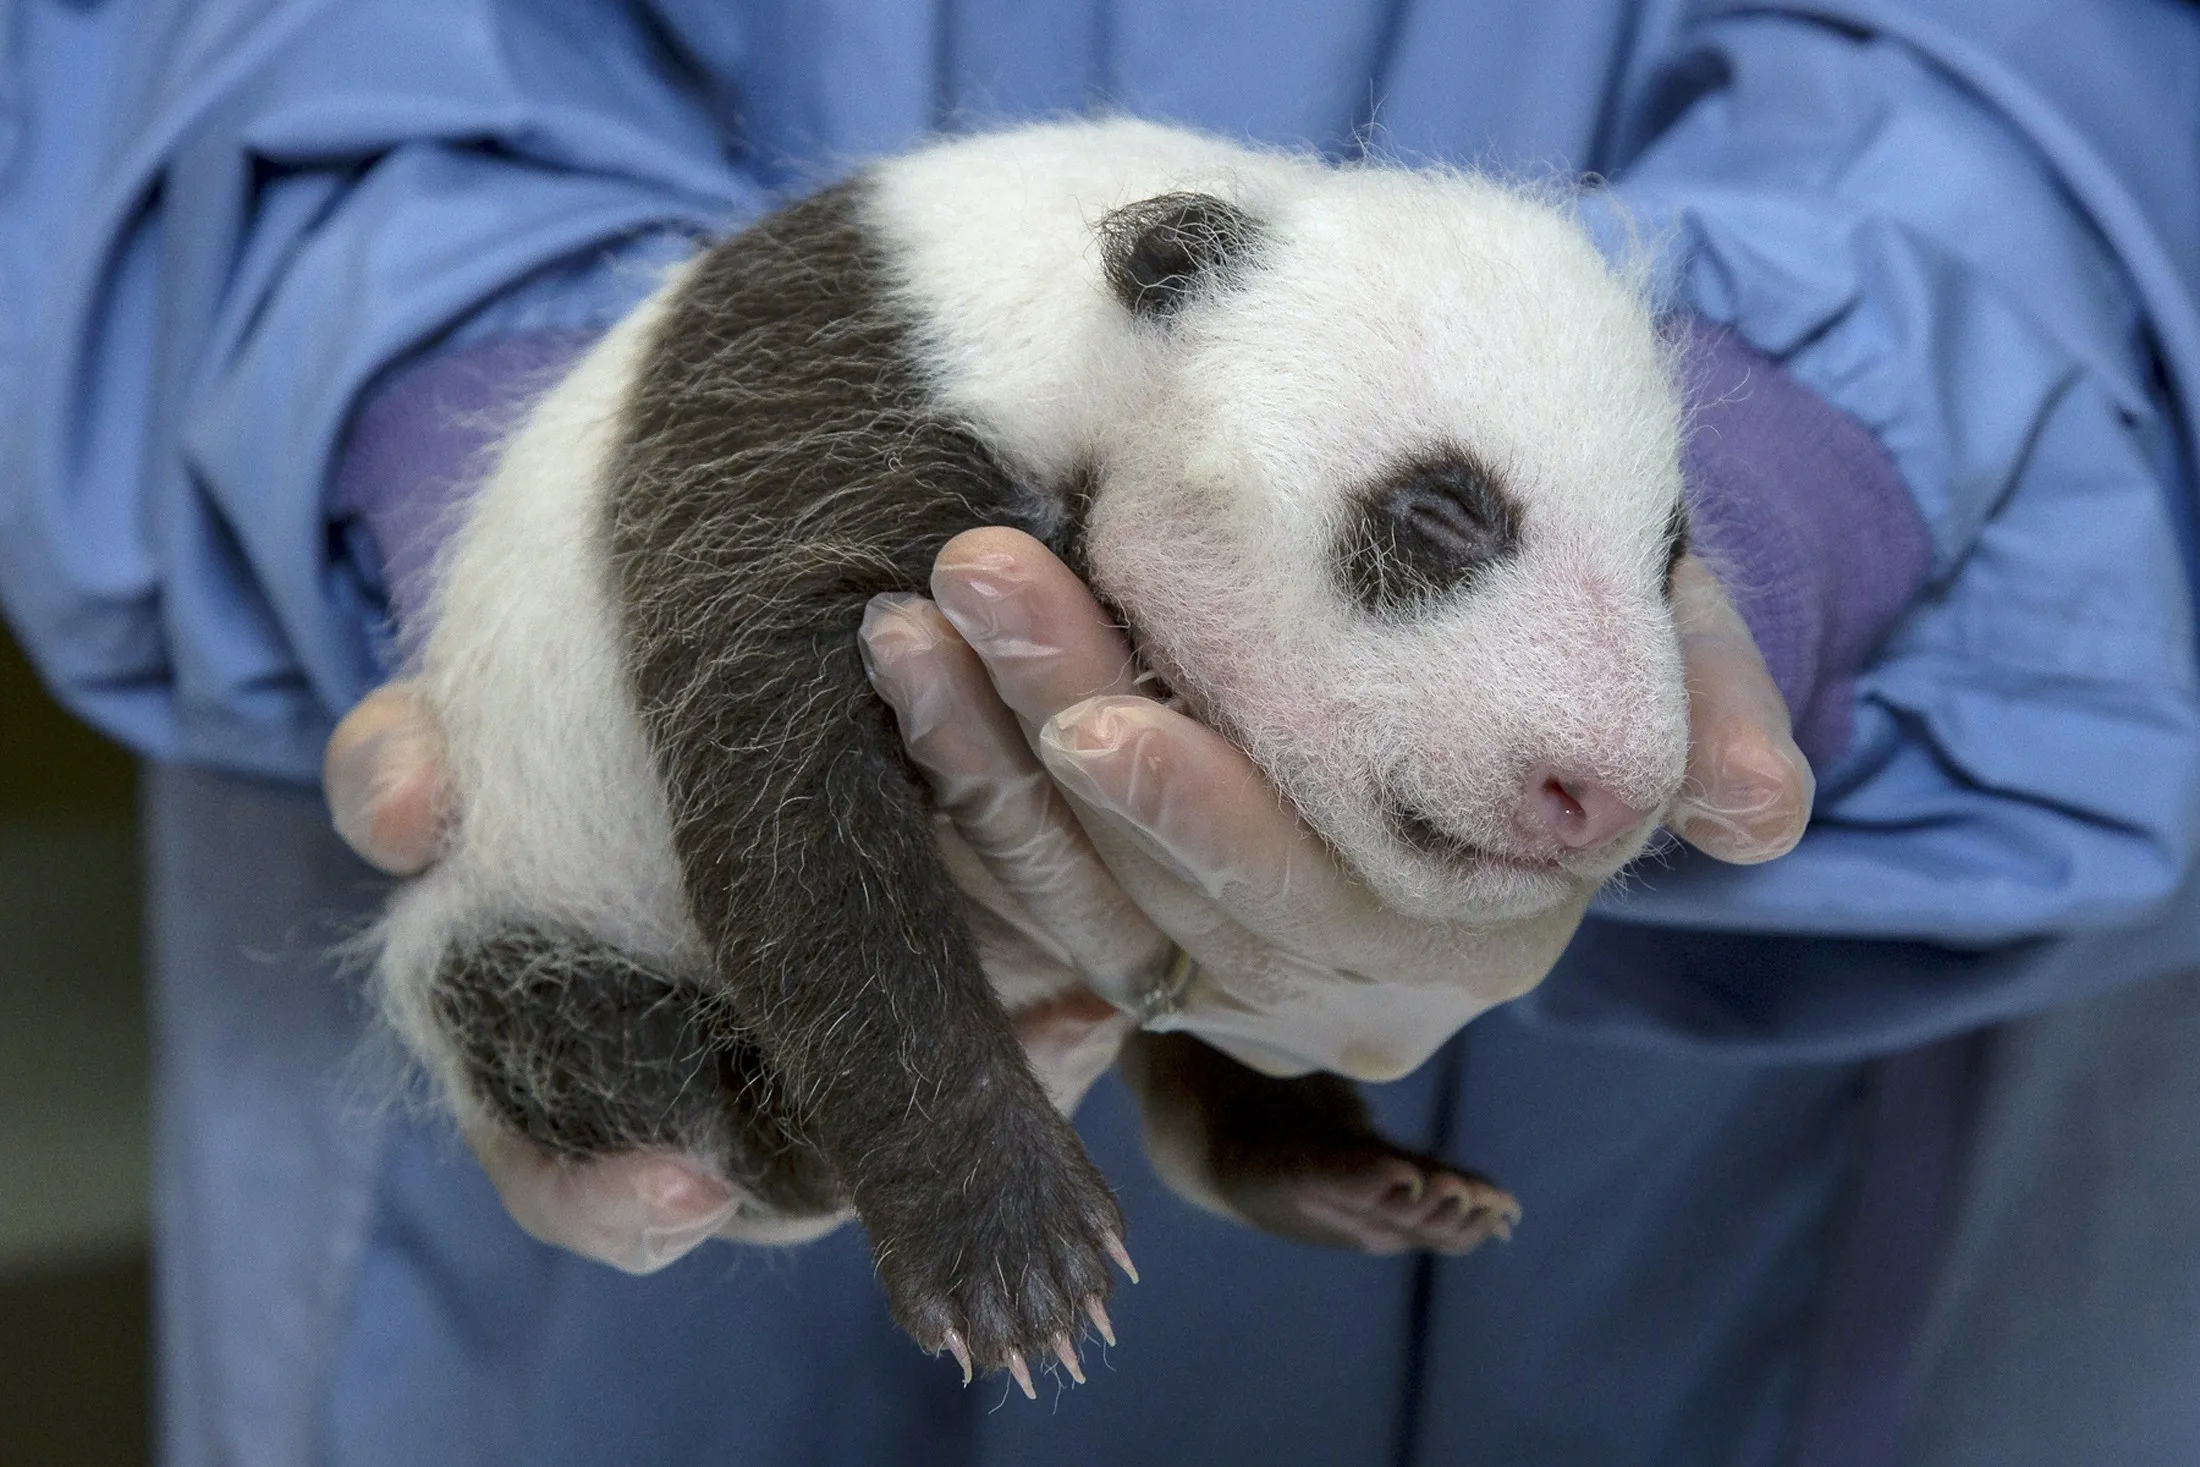 Панда сколько детенышей. Большая Панда с детенышем. Детёныш панды новорожденный. Детёныши панды Новорожденные. Большая Панда новорожденная.